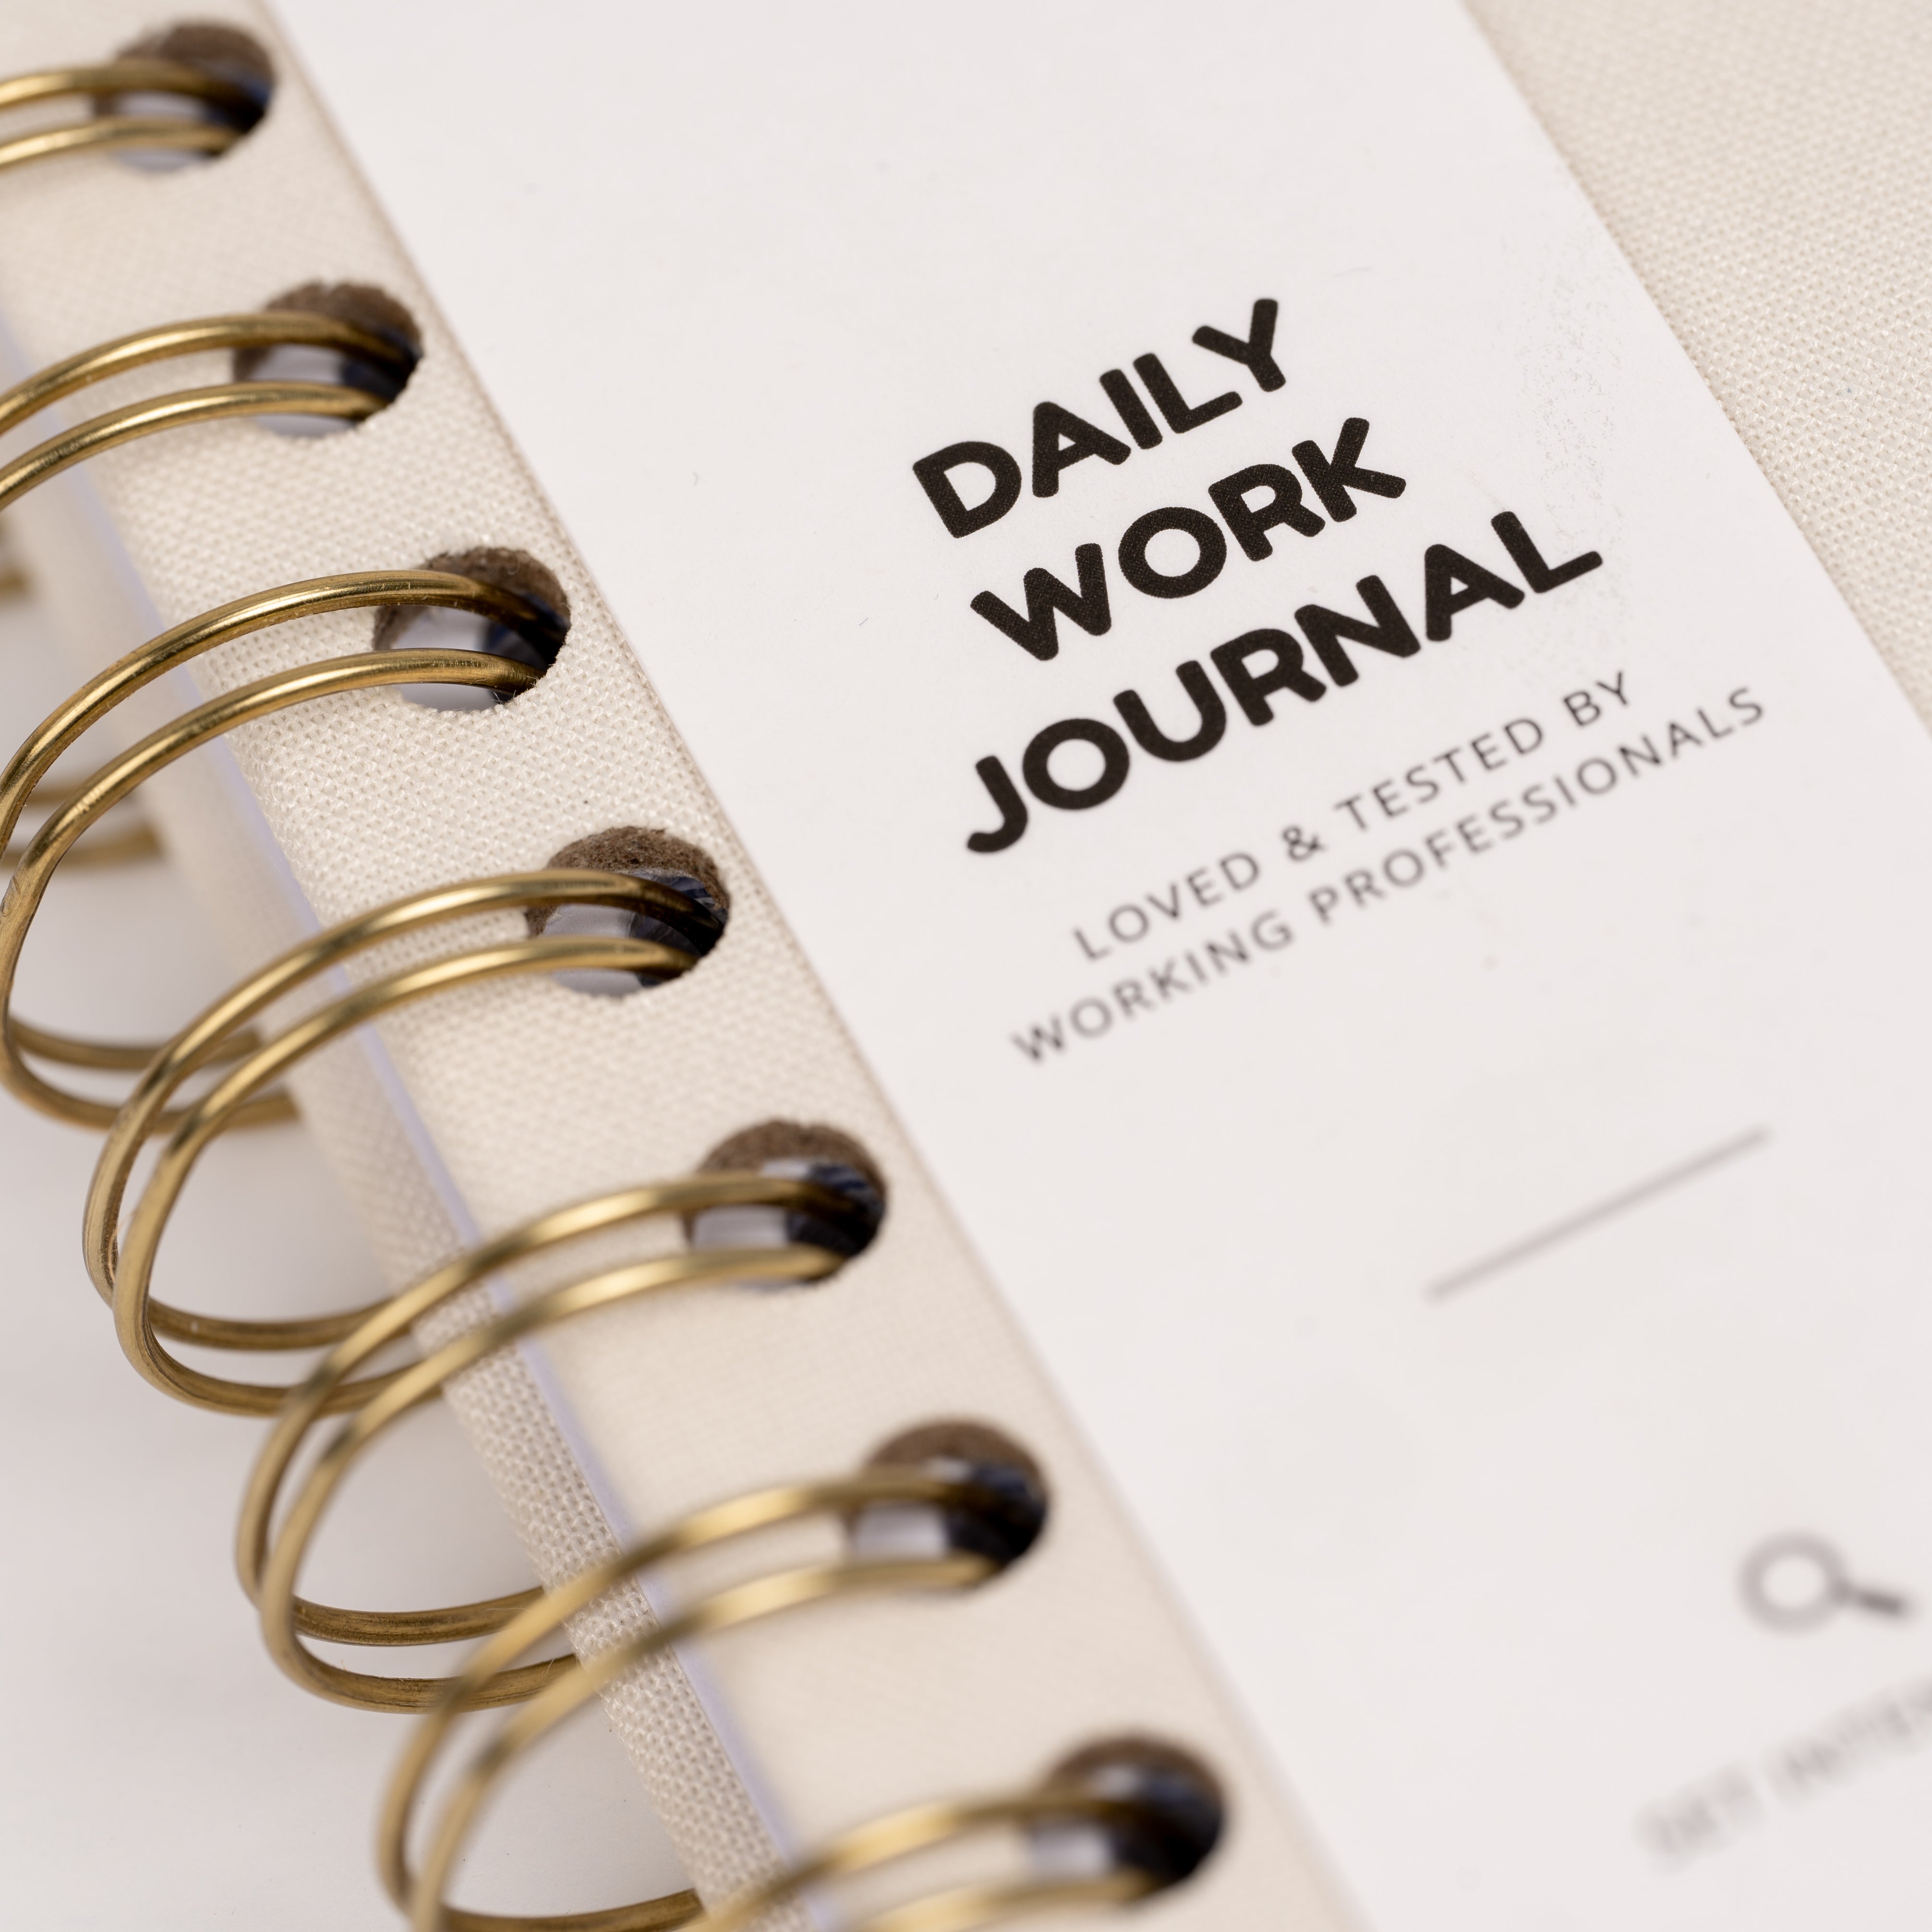 Daily Work Journal - Quarterly Undated